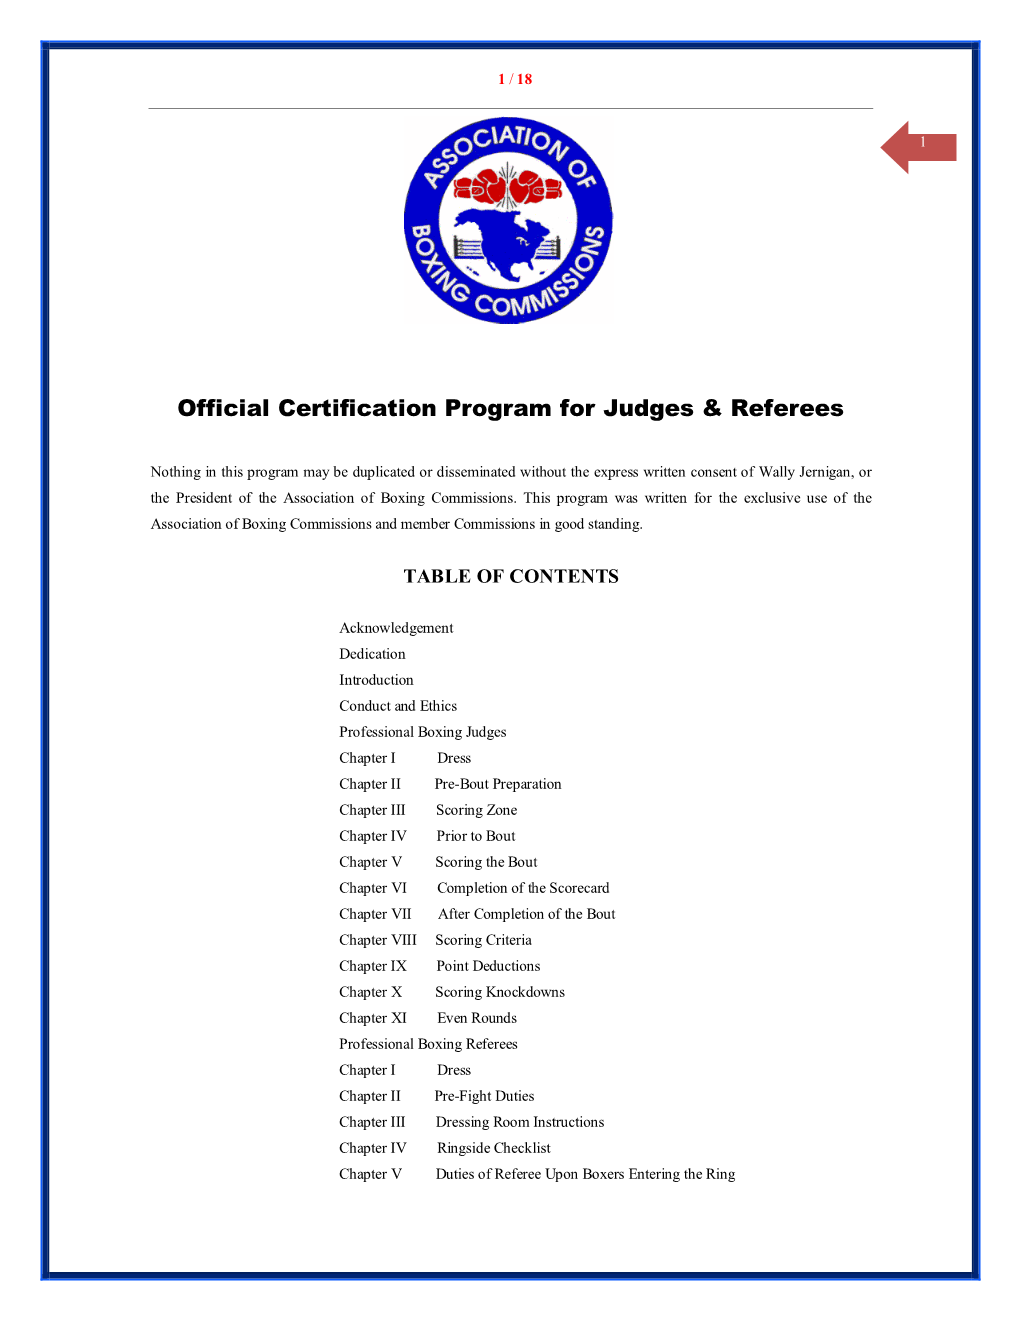 Official Certification Program for Judges & Referees